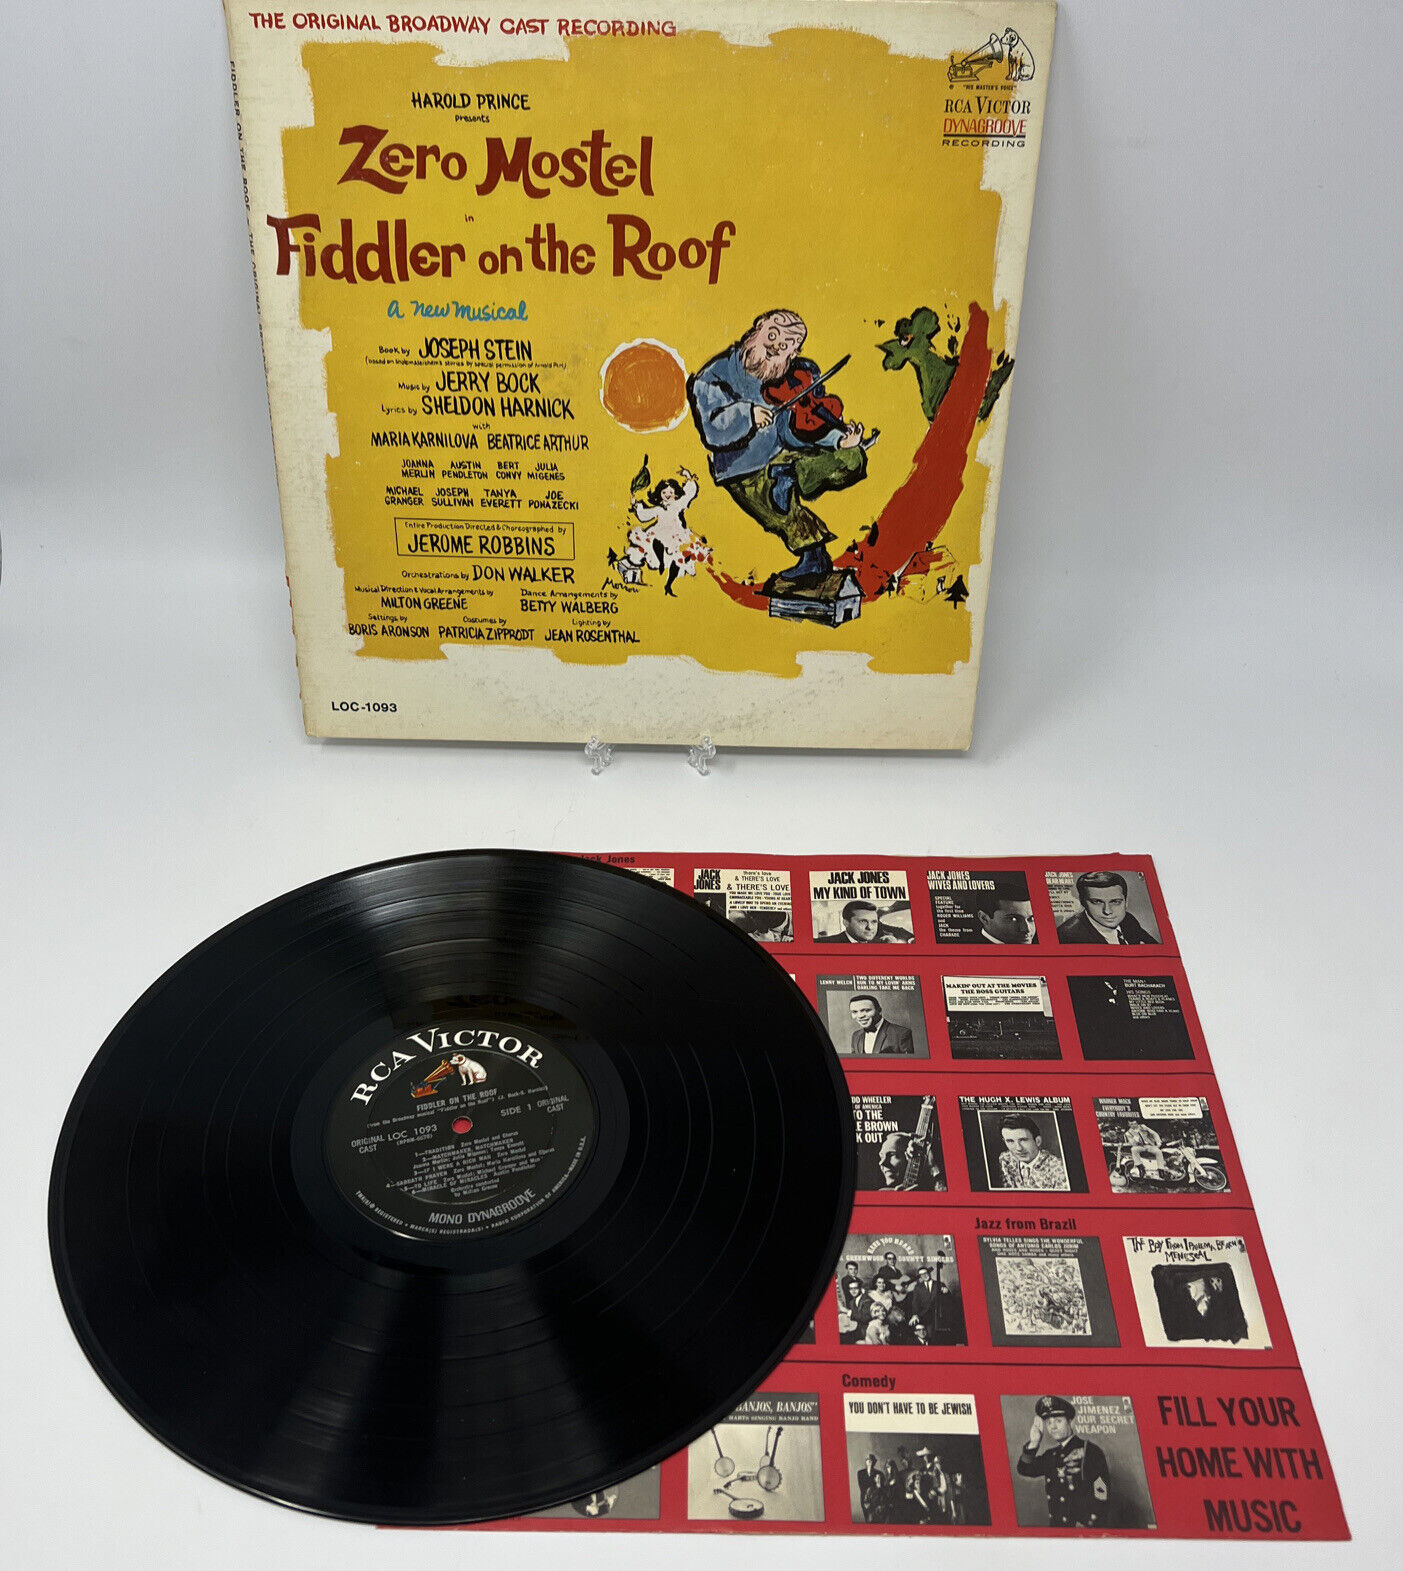 1964 VTG Fiddler On The Roof Original Broadway Cast Vinyl Record LP Zero Mostel